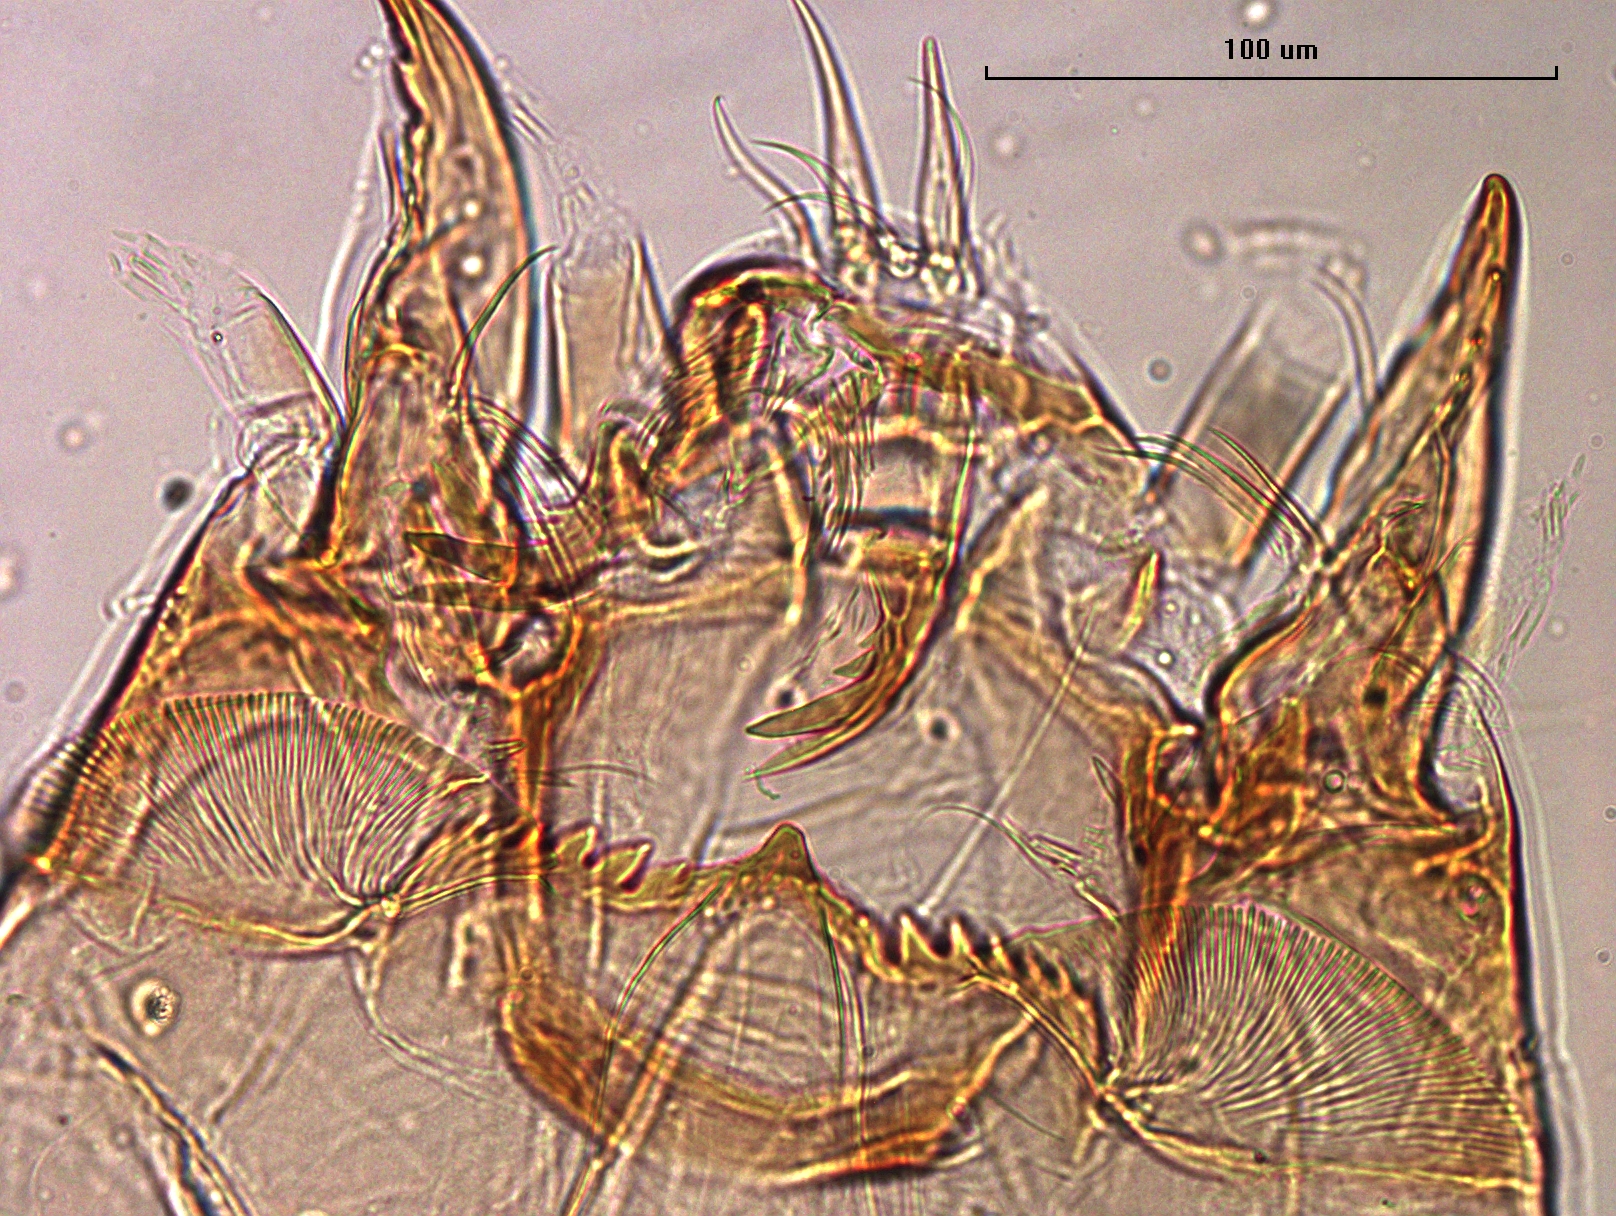 photomicrograph of the head capsule of a chironomid midge larva showing the pectin epiharyngis